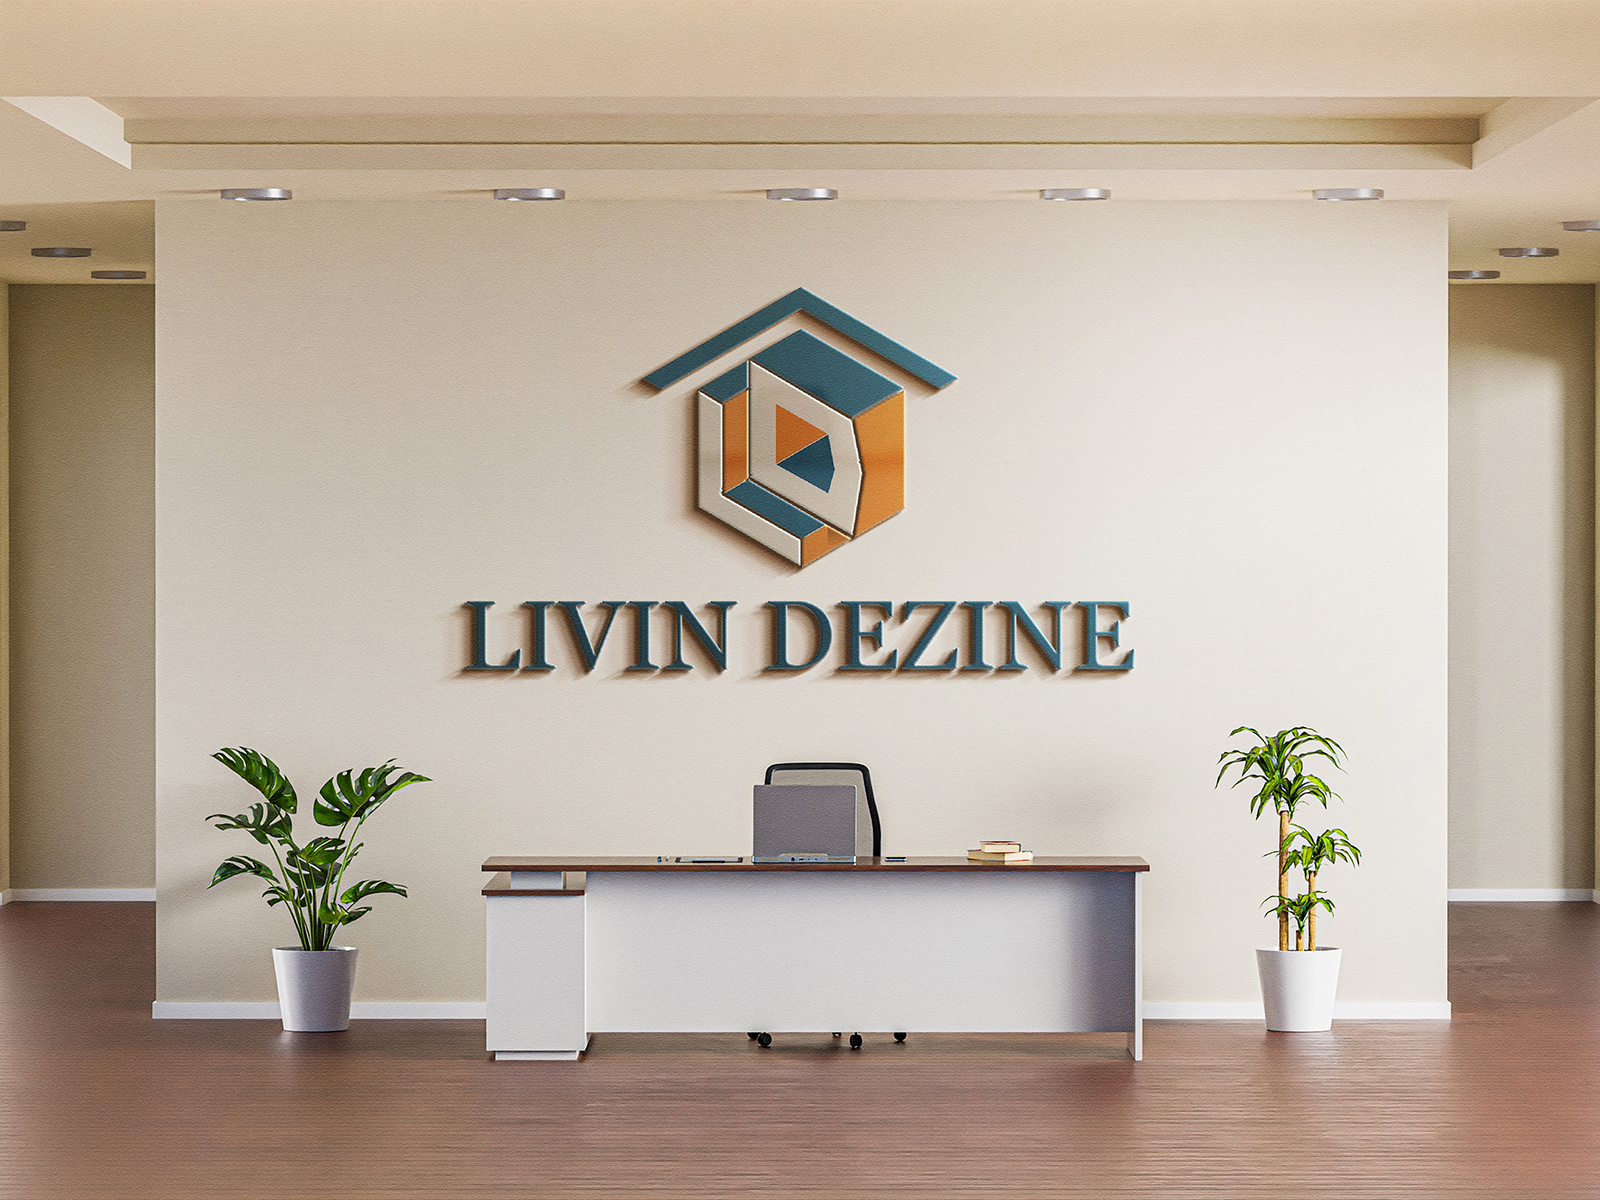 Livin dezine by Wesually Design Studio on Dribbble